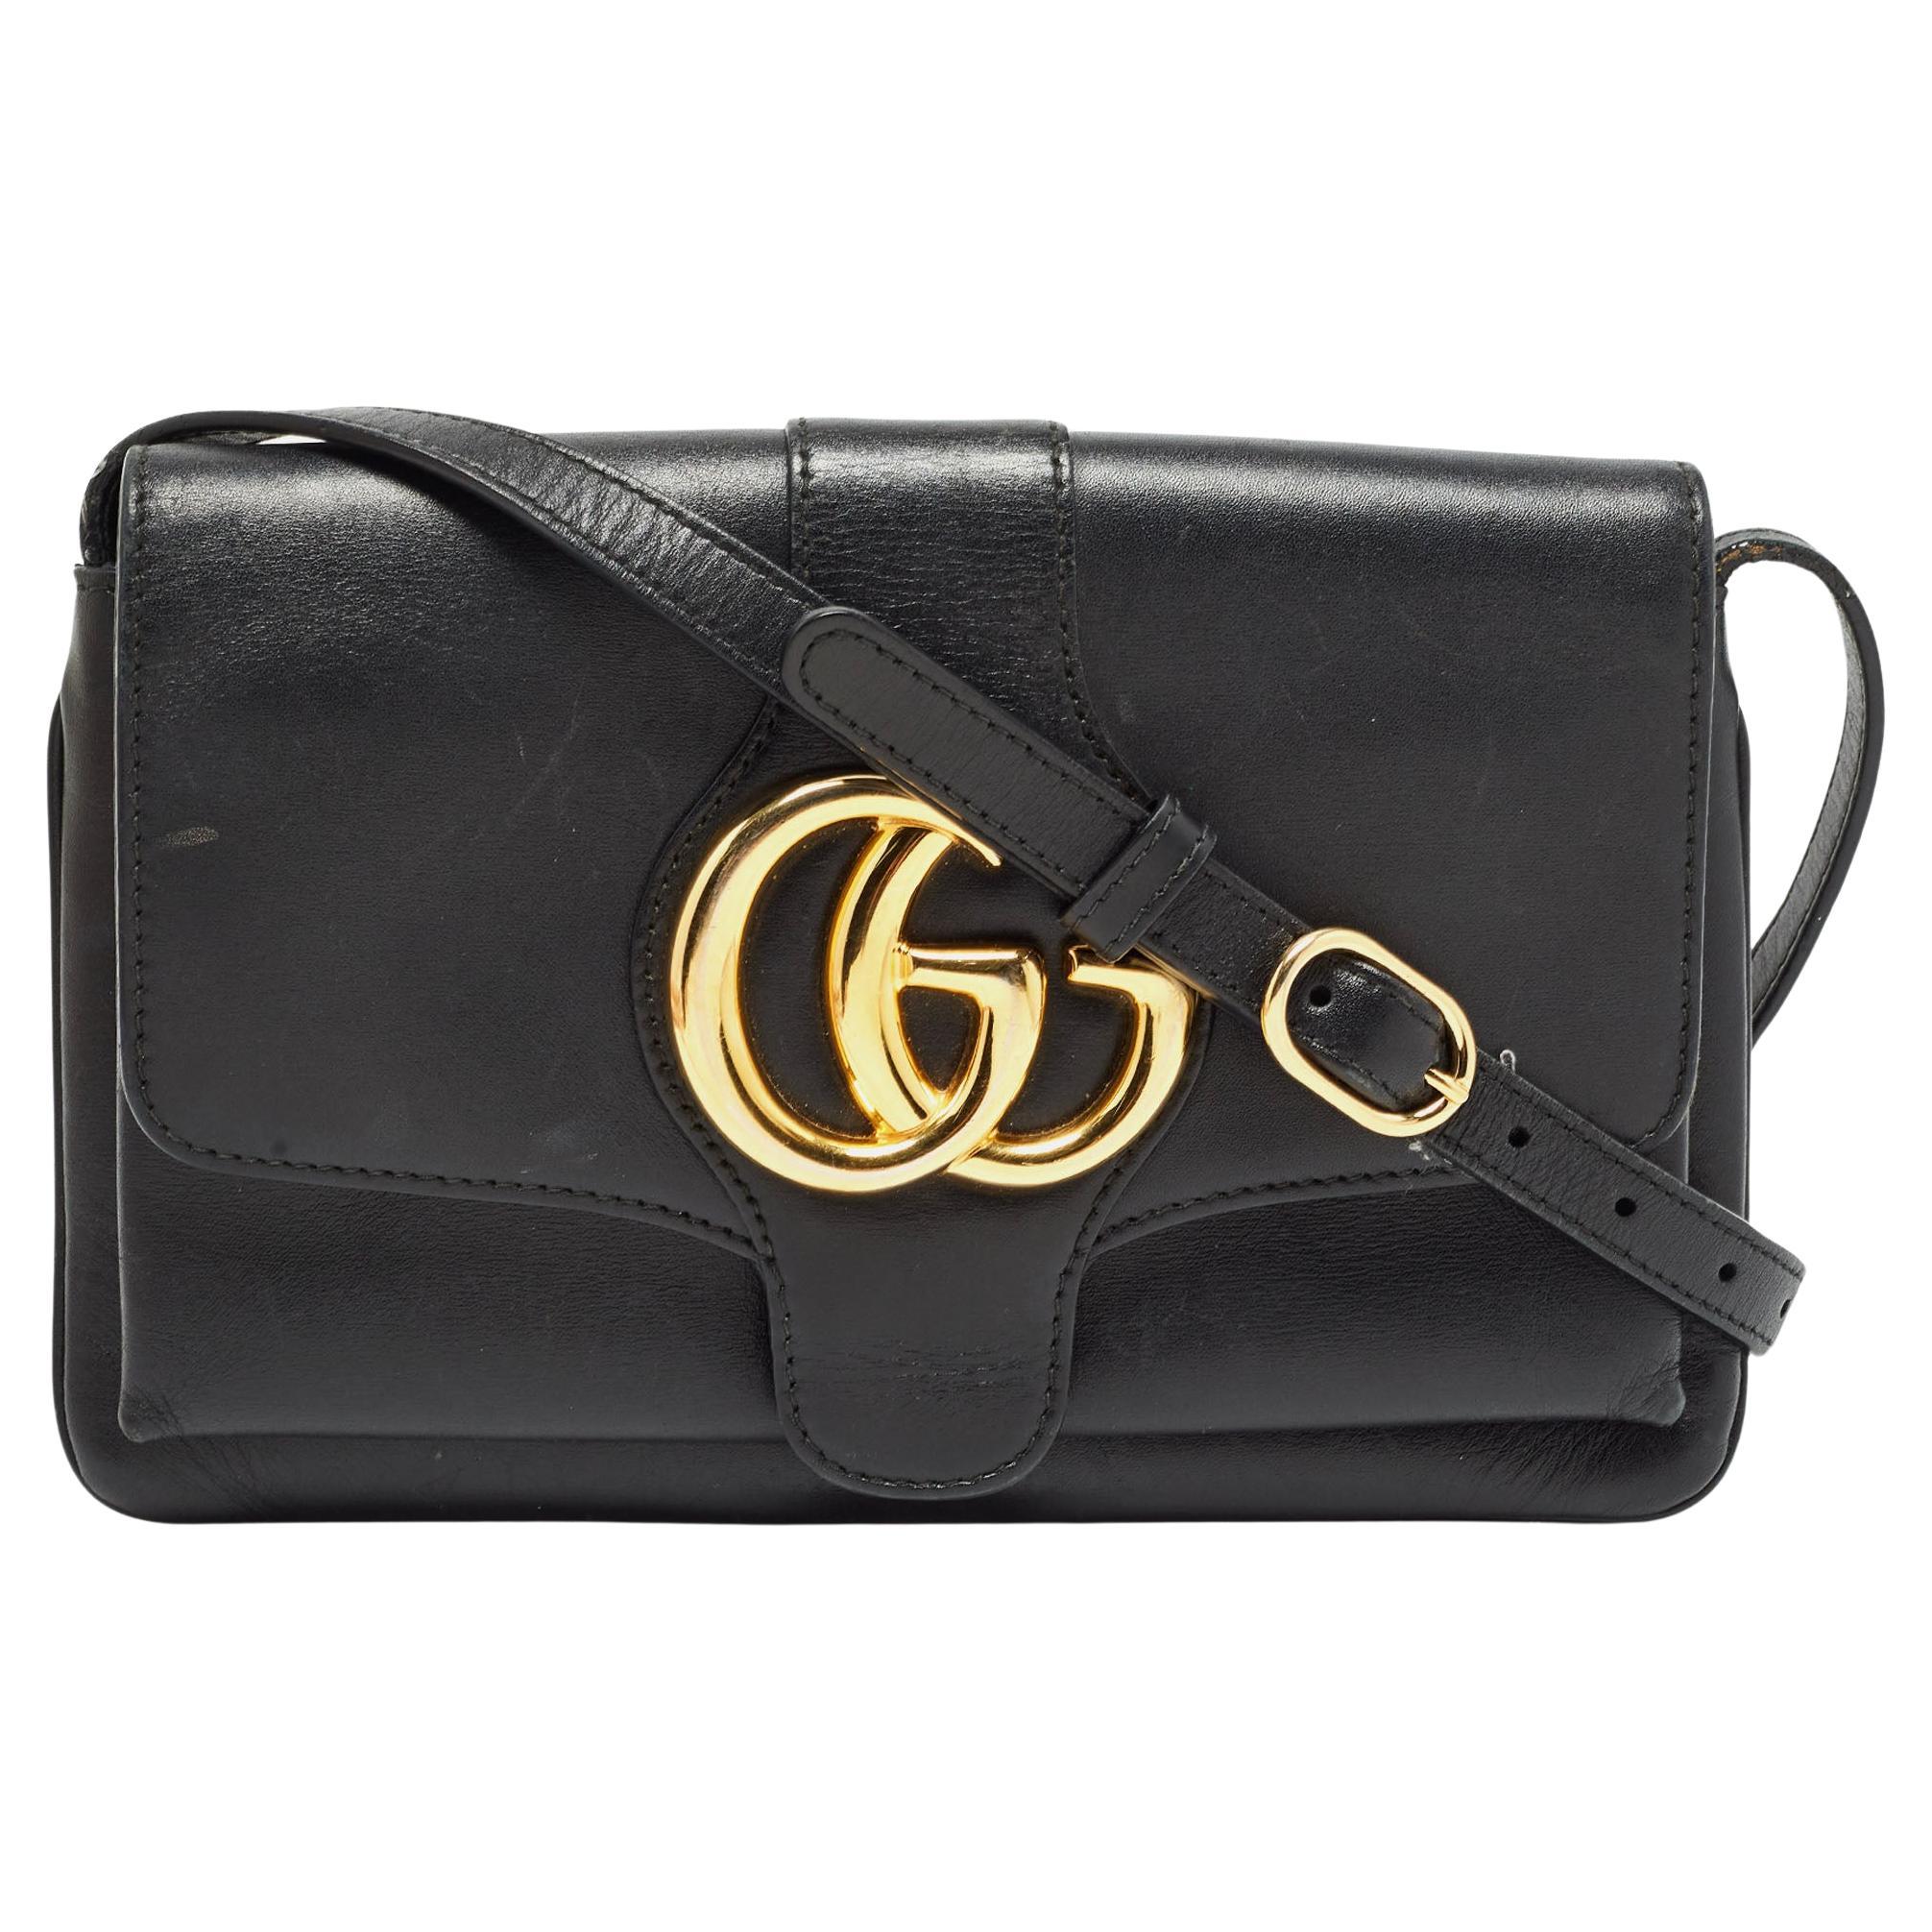 Gucci Black Leather Small Arli Shoulder Bag